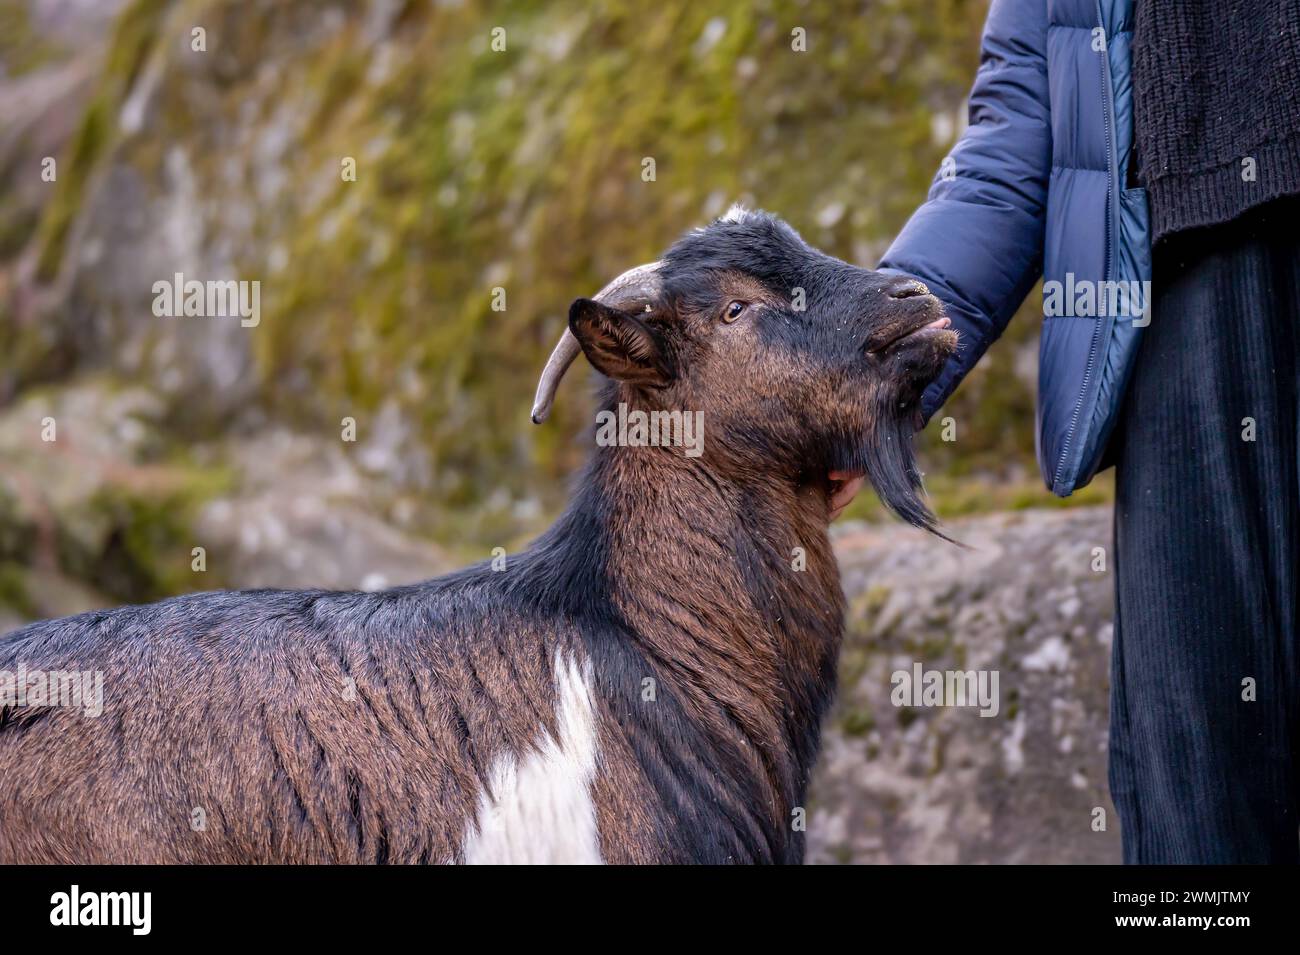 People caressing bezoar goat. Capra hircus. Outdoors. Stock Photo